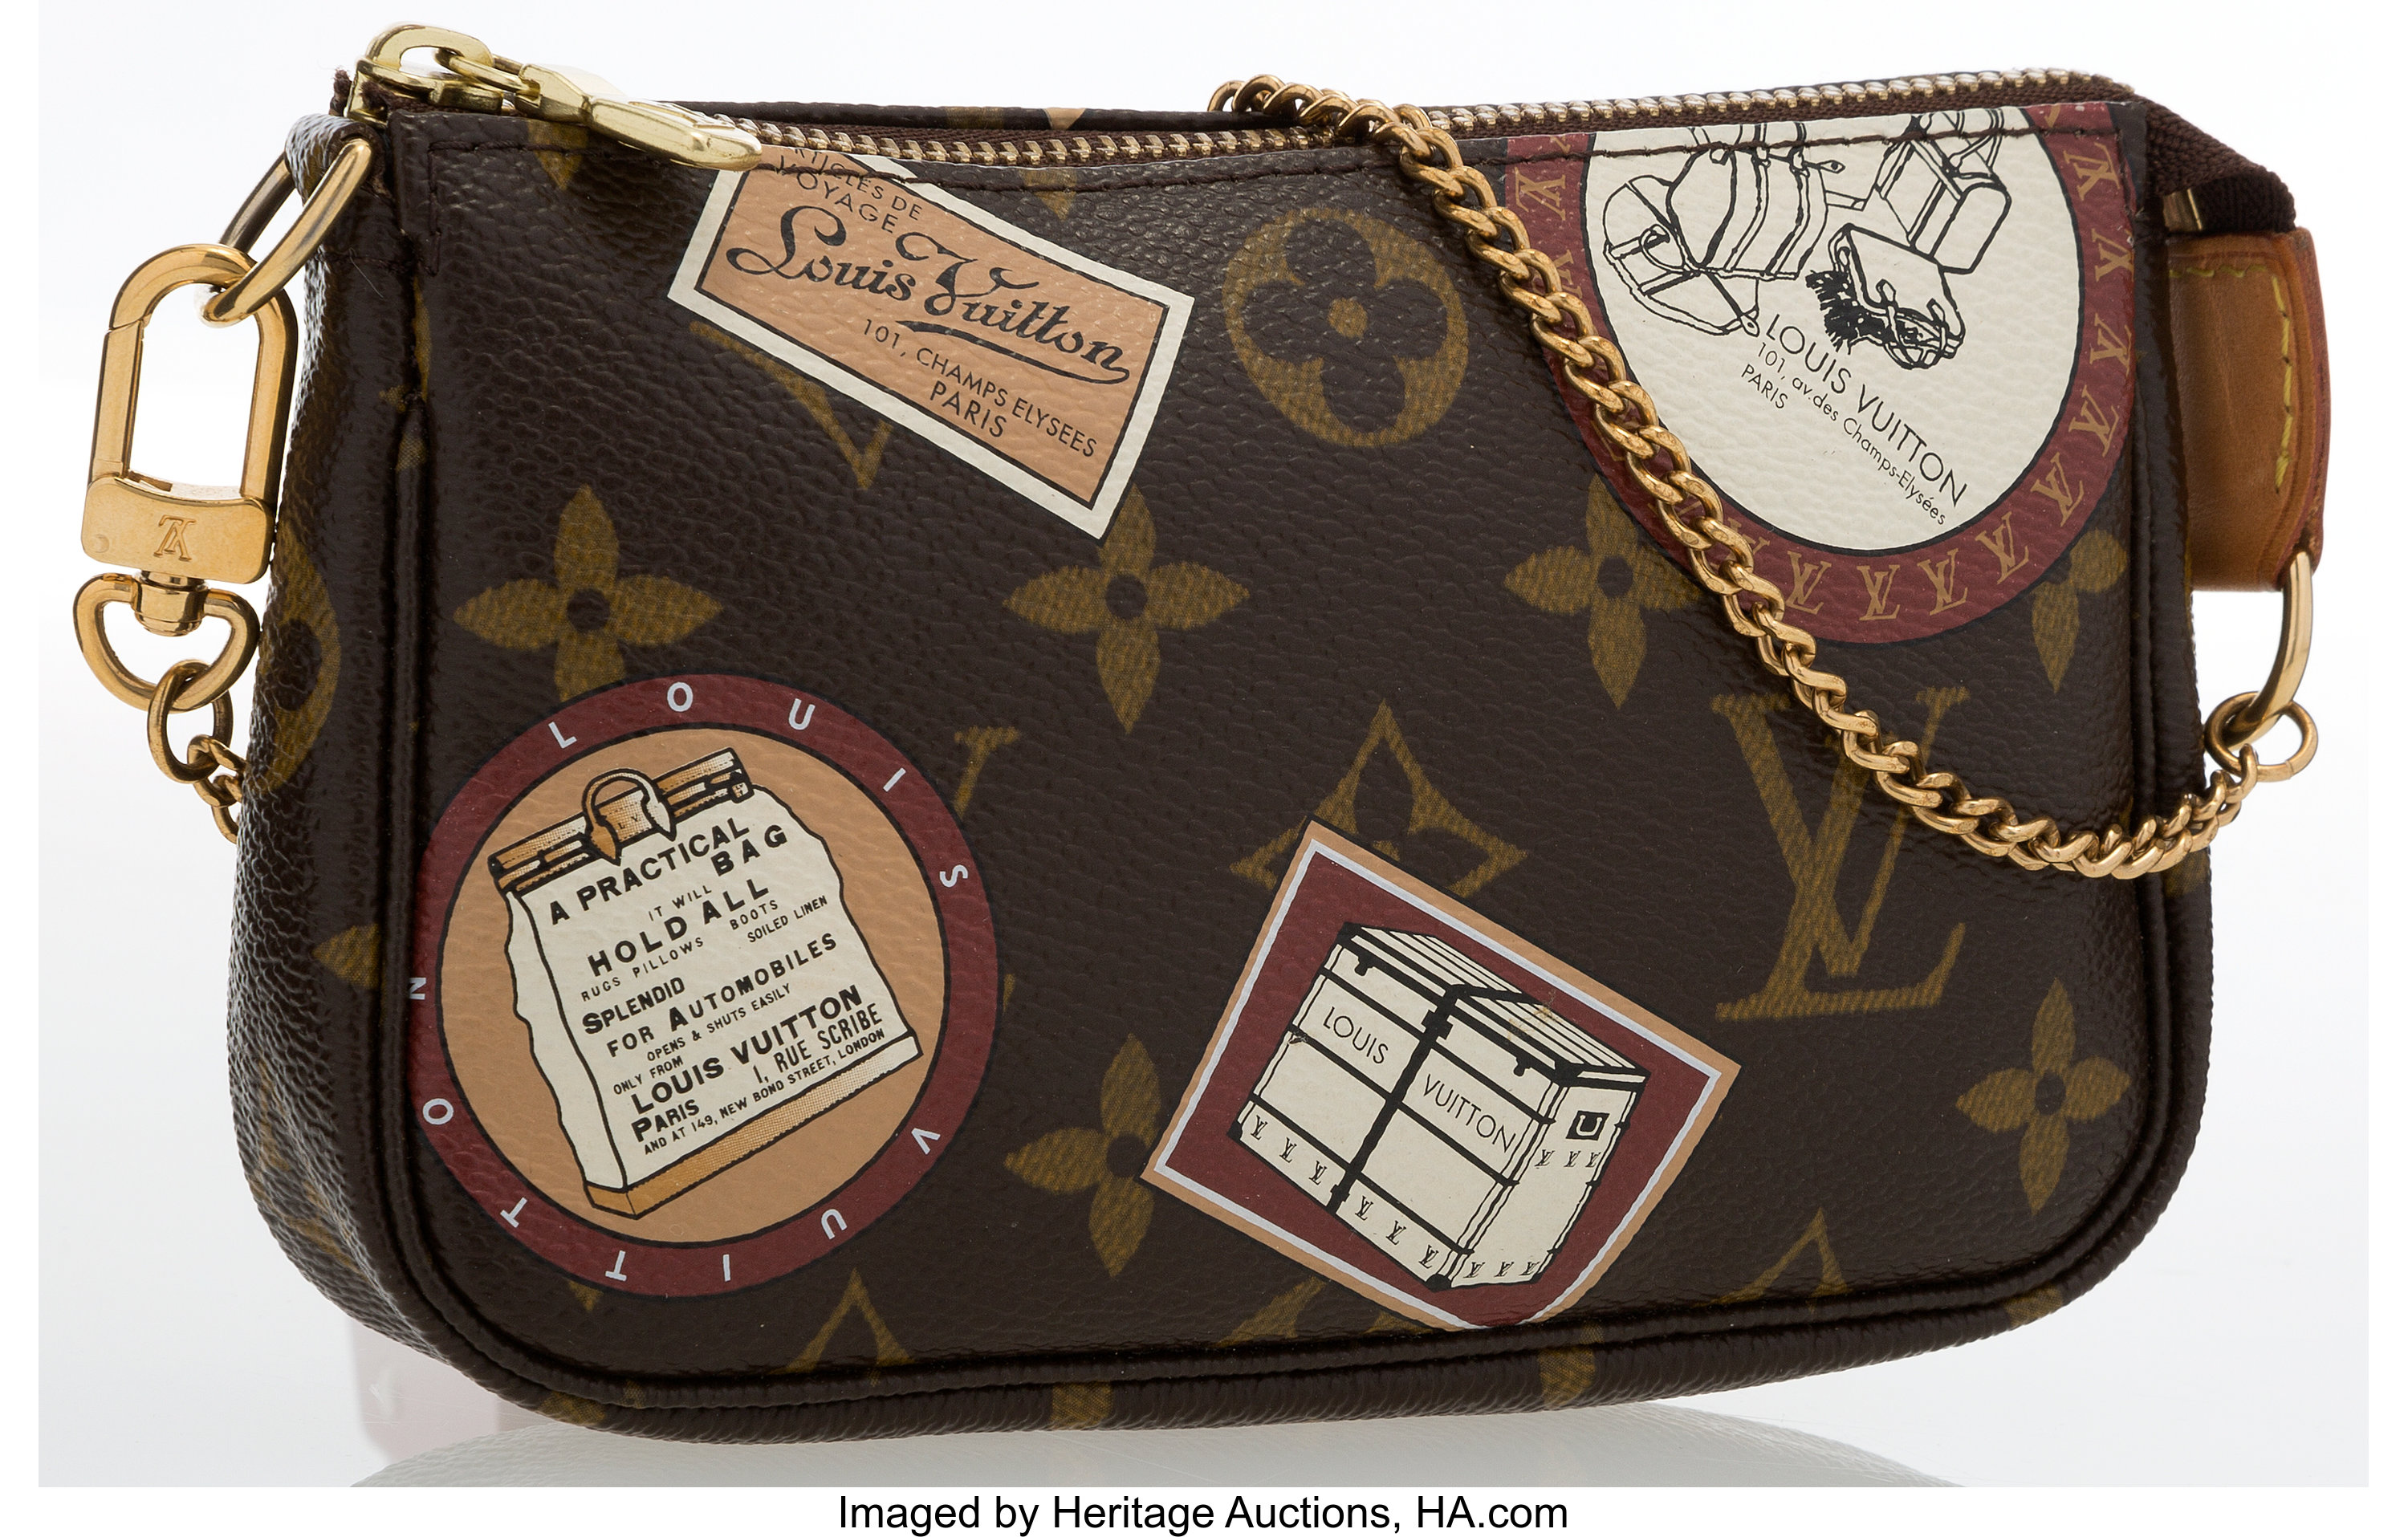 Pochette Accessoires My LV Heritage Monogram - Bags